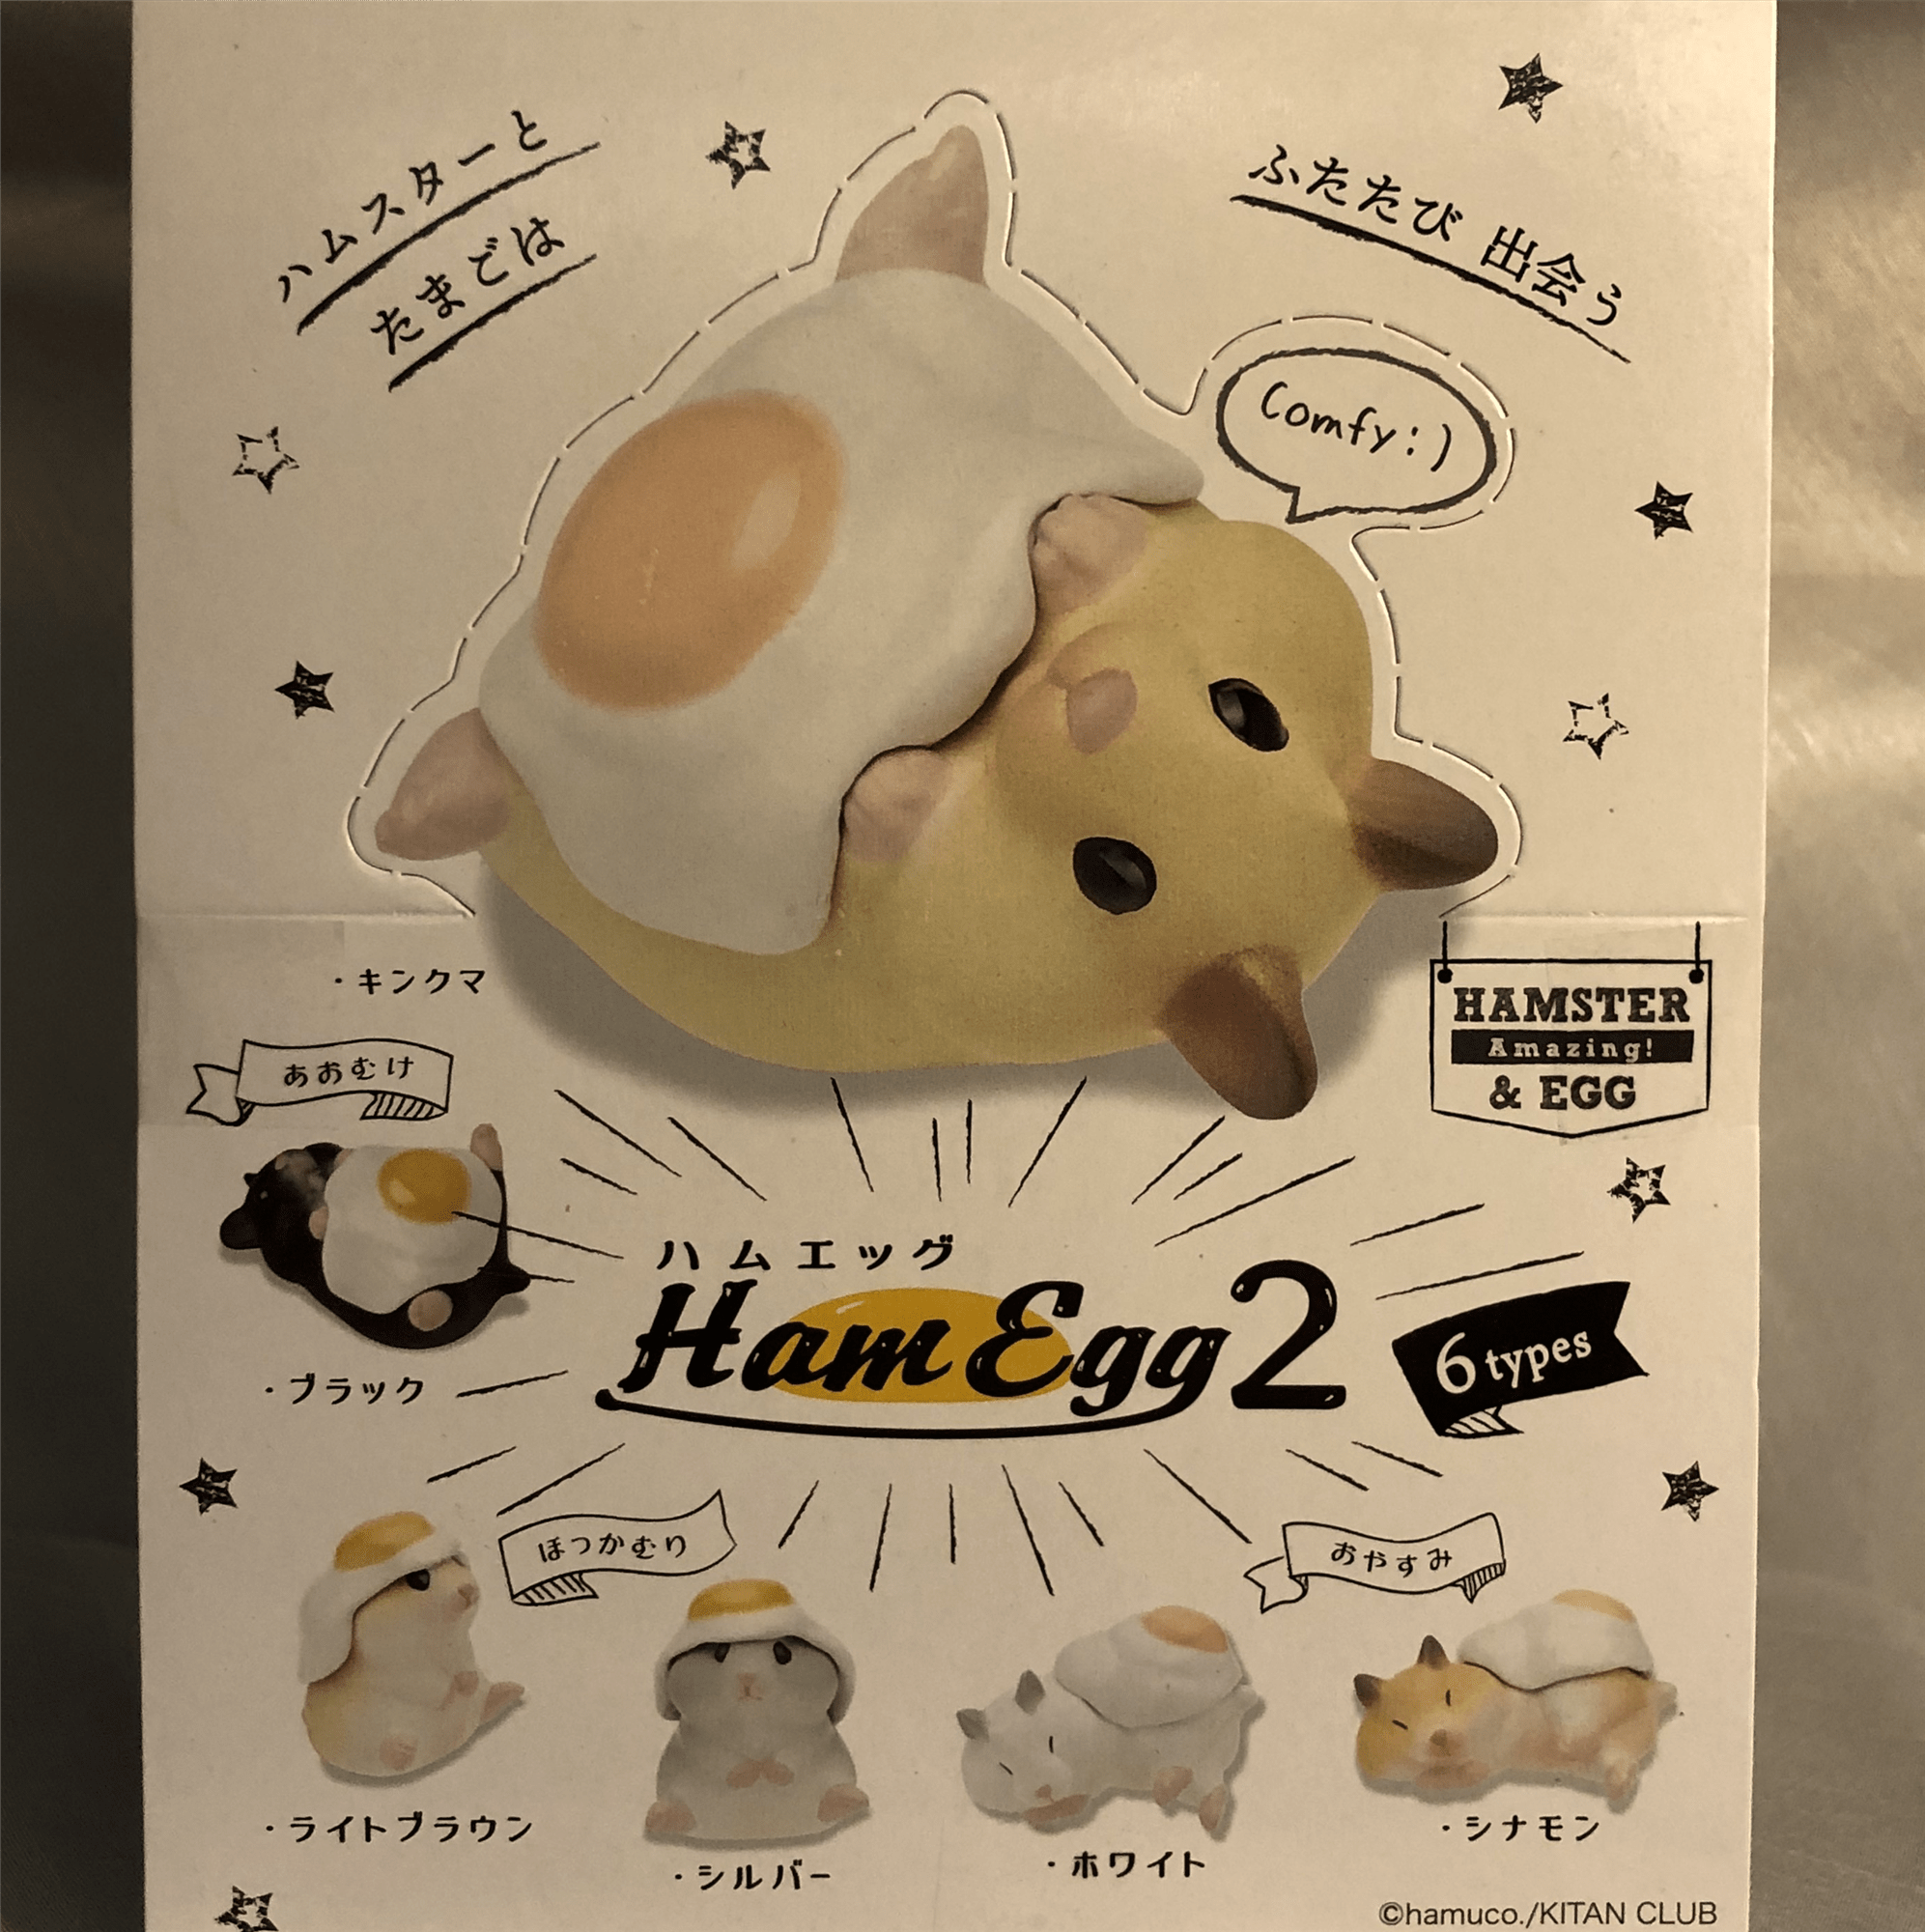 Ham Egg 2!  Amazing Hamster & Egg Surprise Box